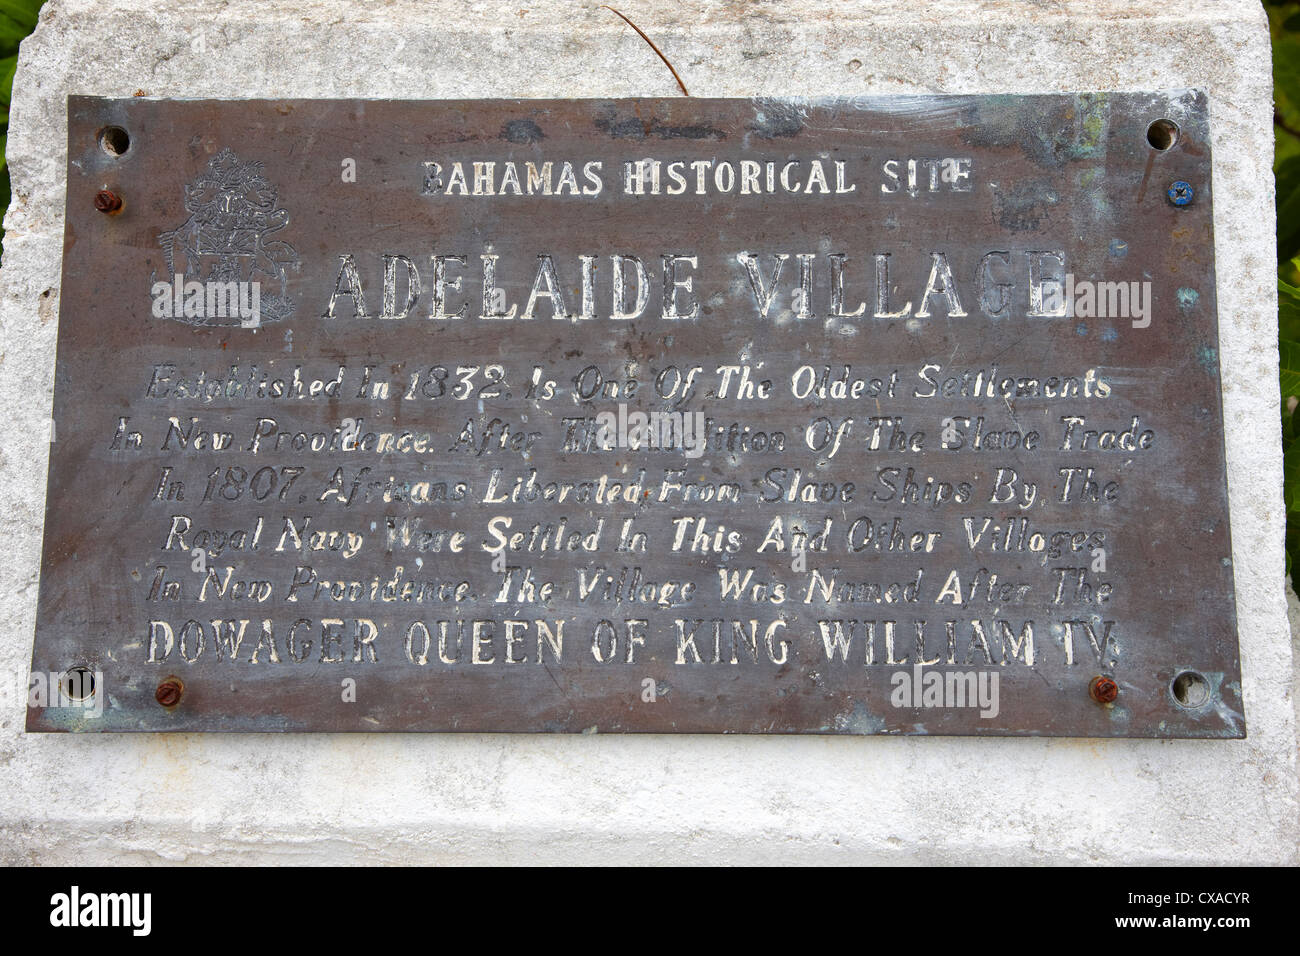 Adelaide Village Plaque, Bahamas Historical Site, New Providence Island, the Bahamas, Caribbean Stock Photo